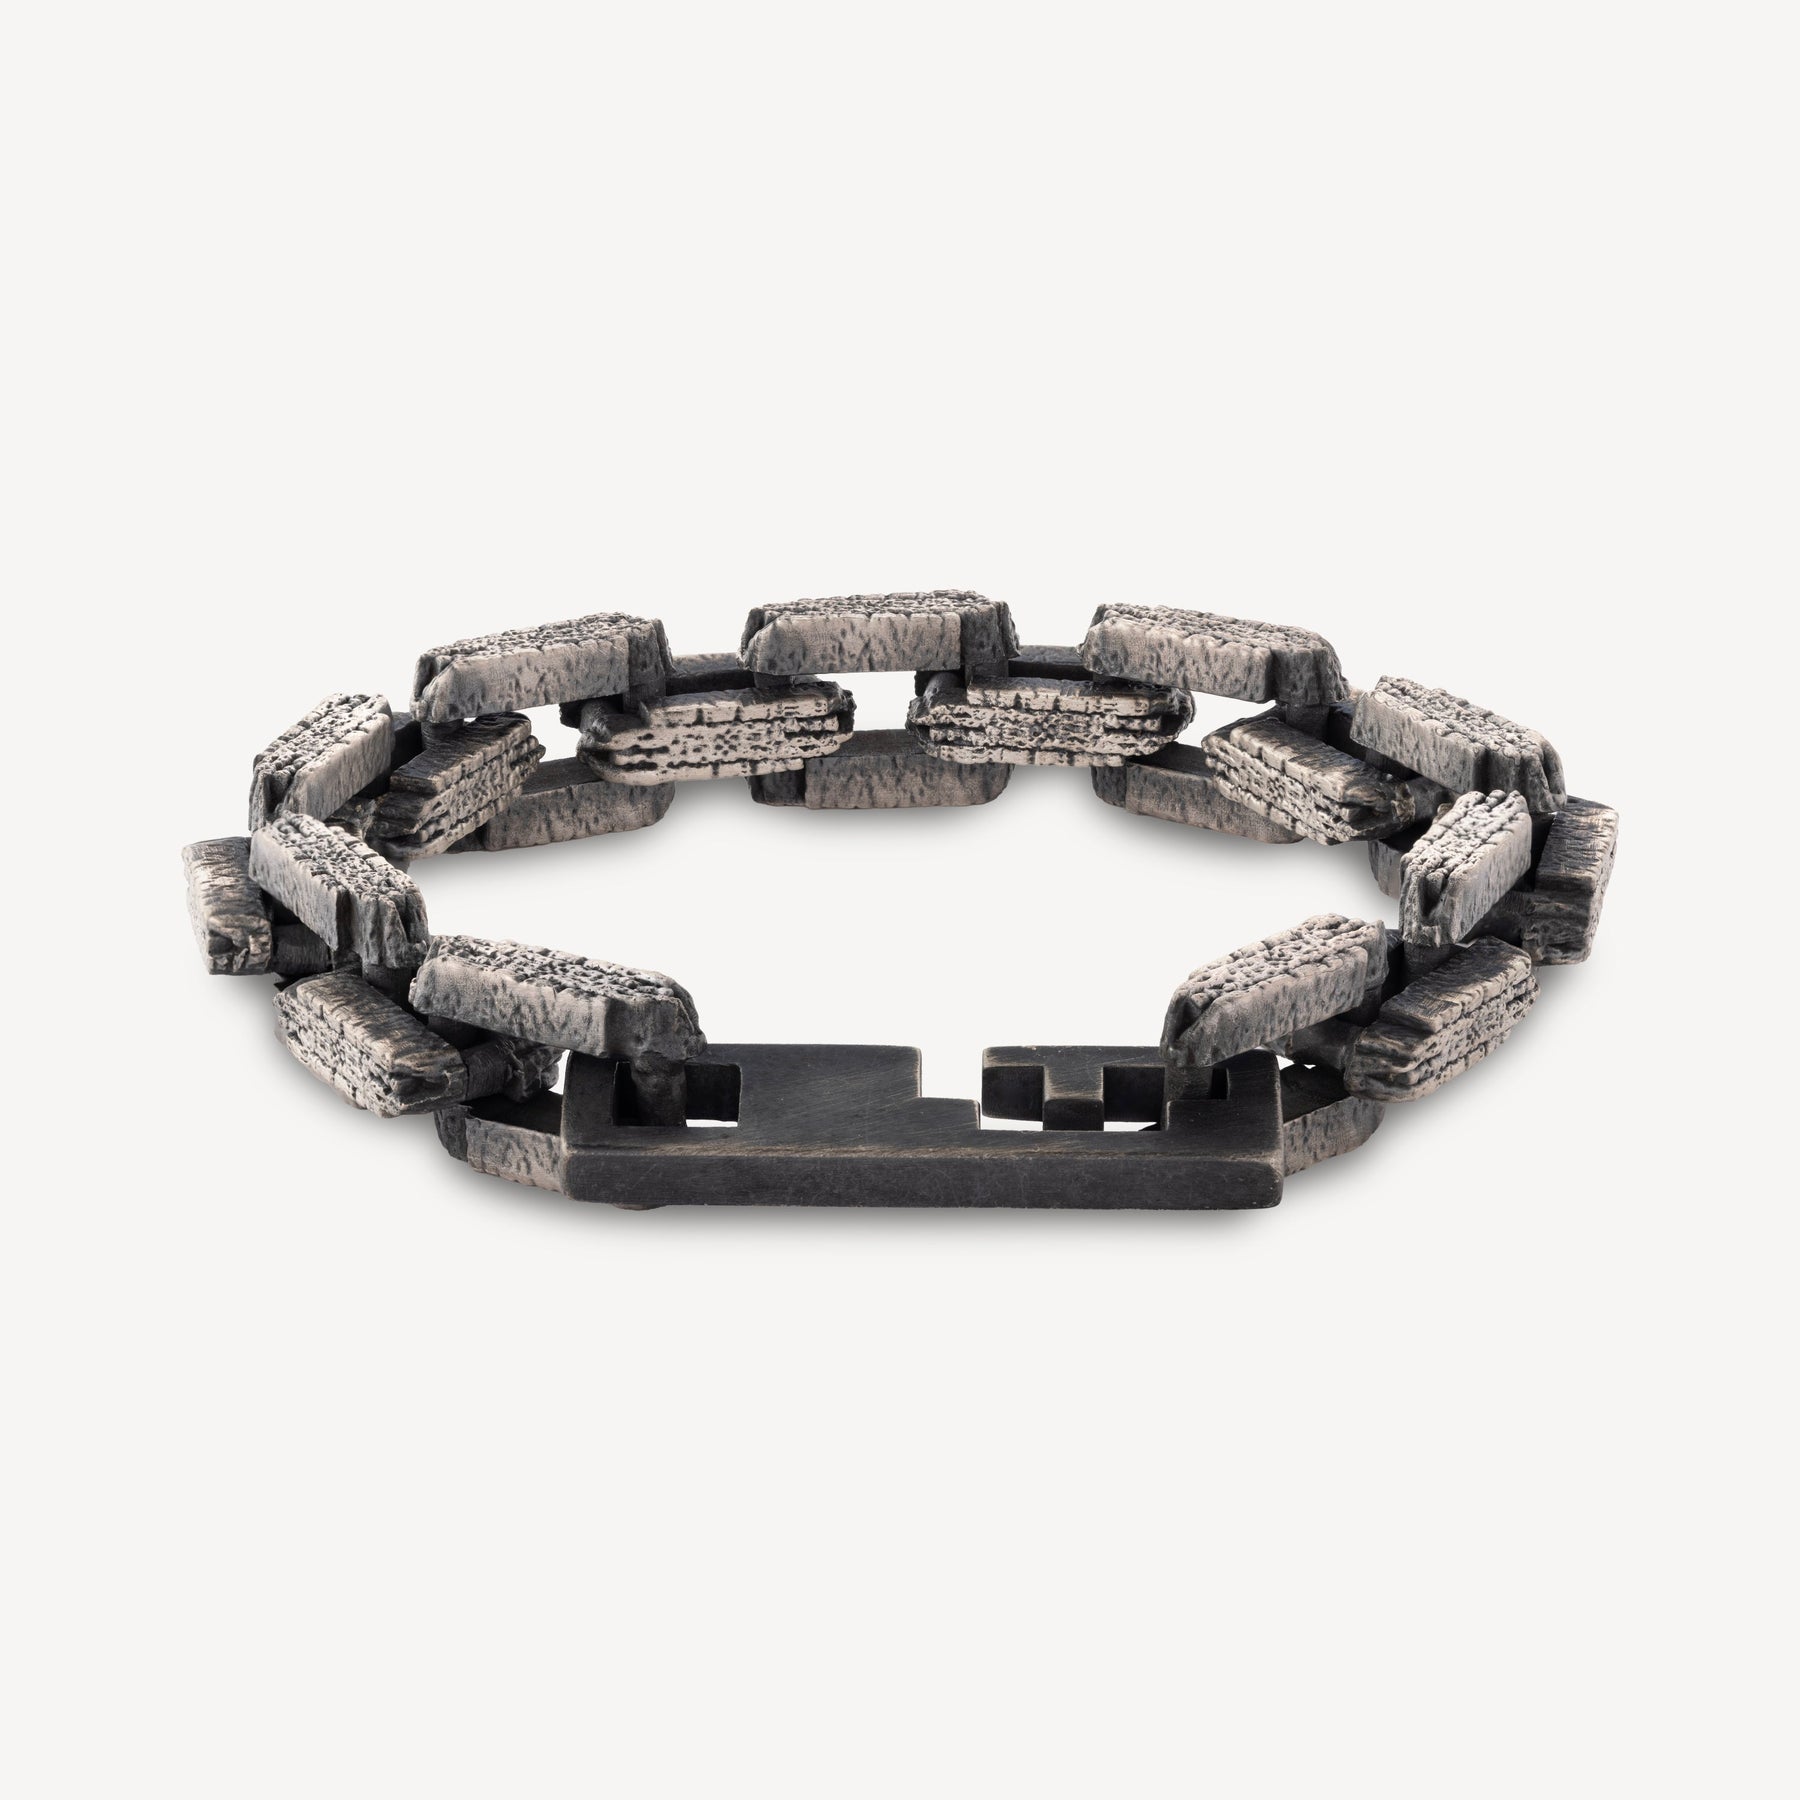 AZK-VK0 Medium Bracelet